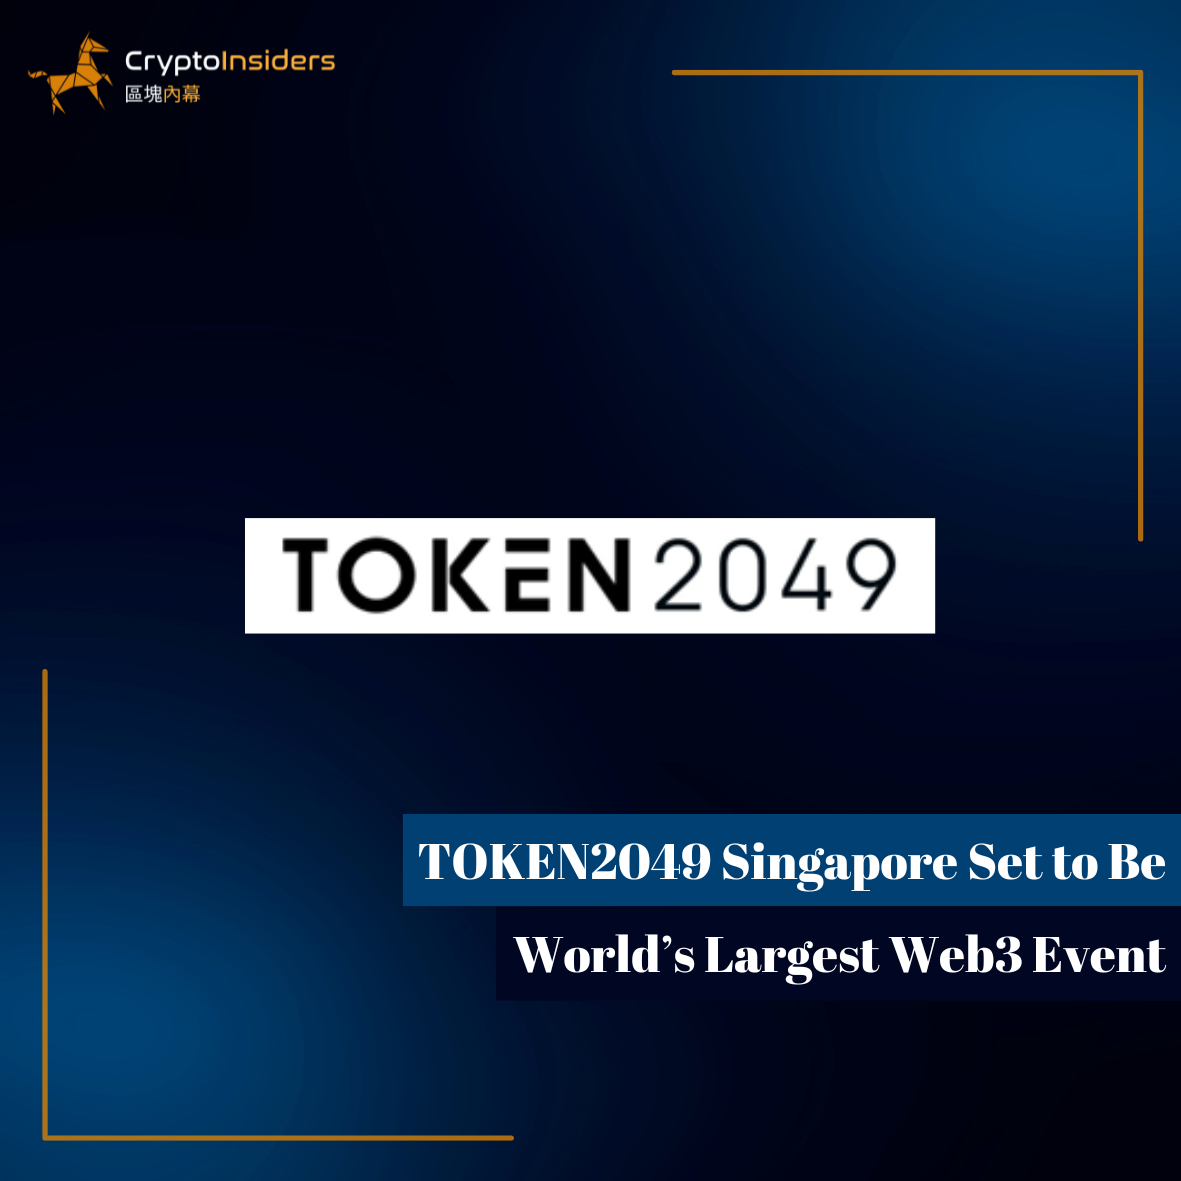 TOKEN2049 Singapore web3 event - Crypto Insiders | Hong Kong Blockchain News